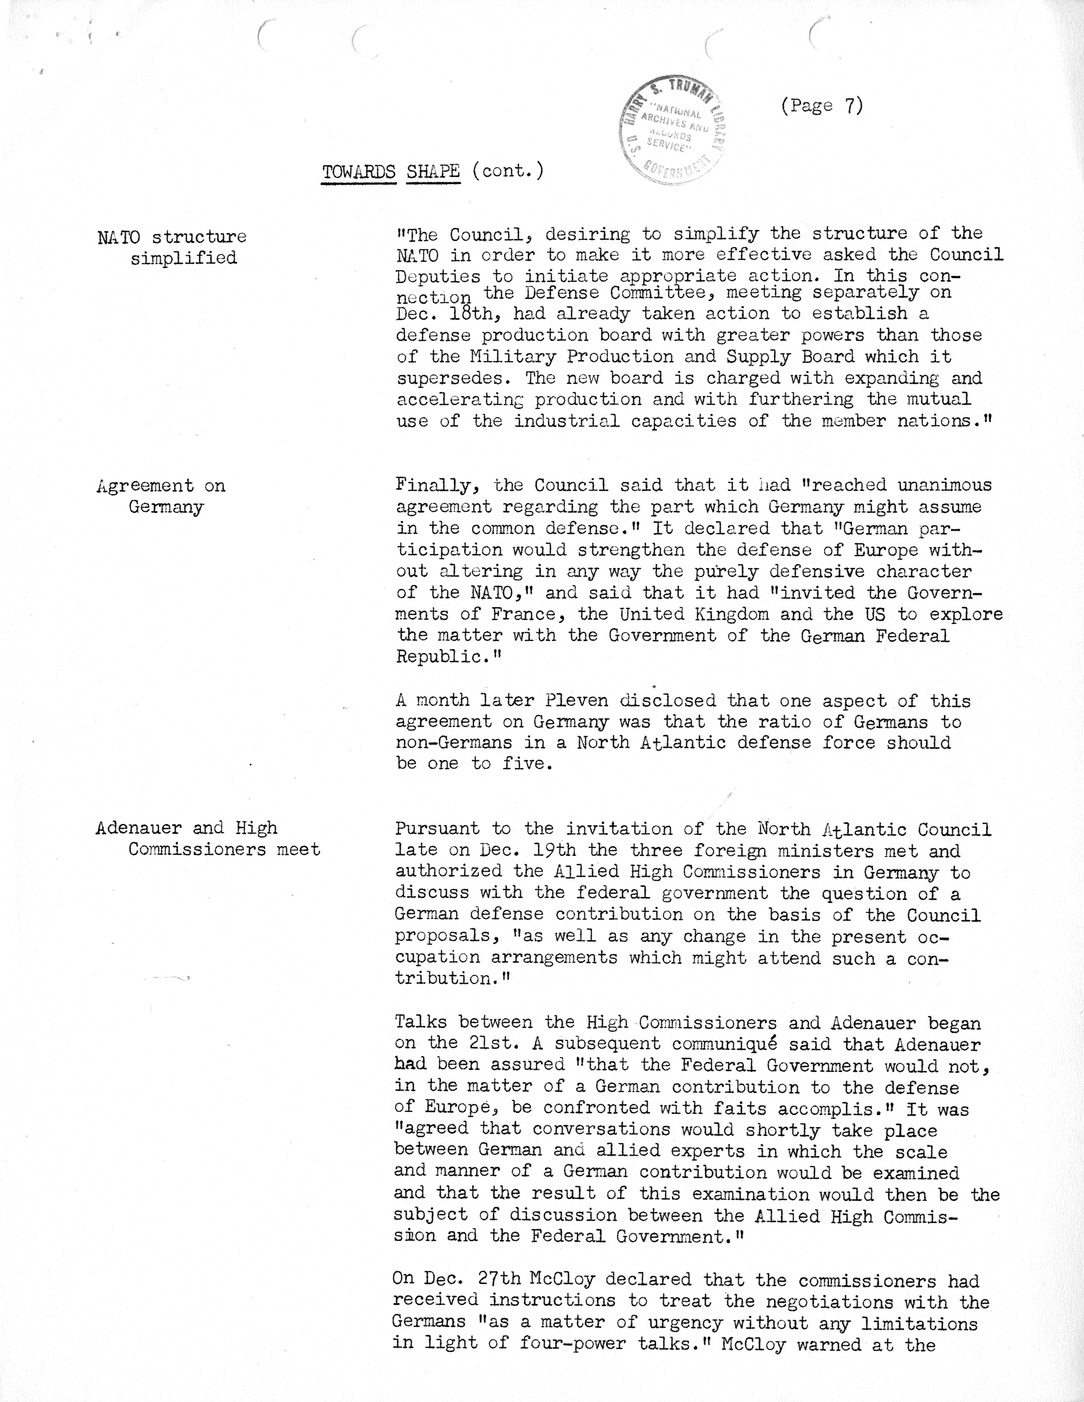 Synopsis G, Towards SHAPE, October-December 1950,